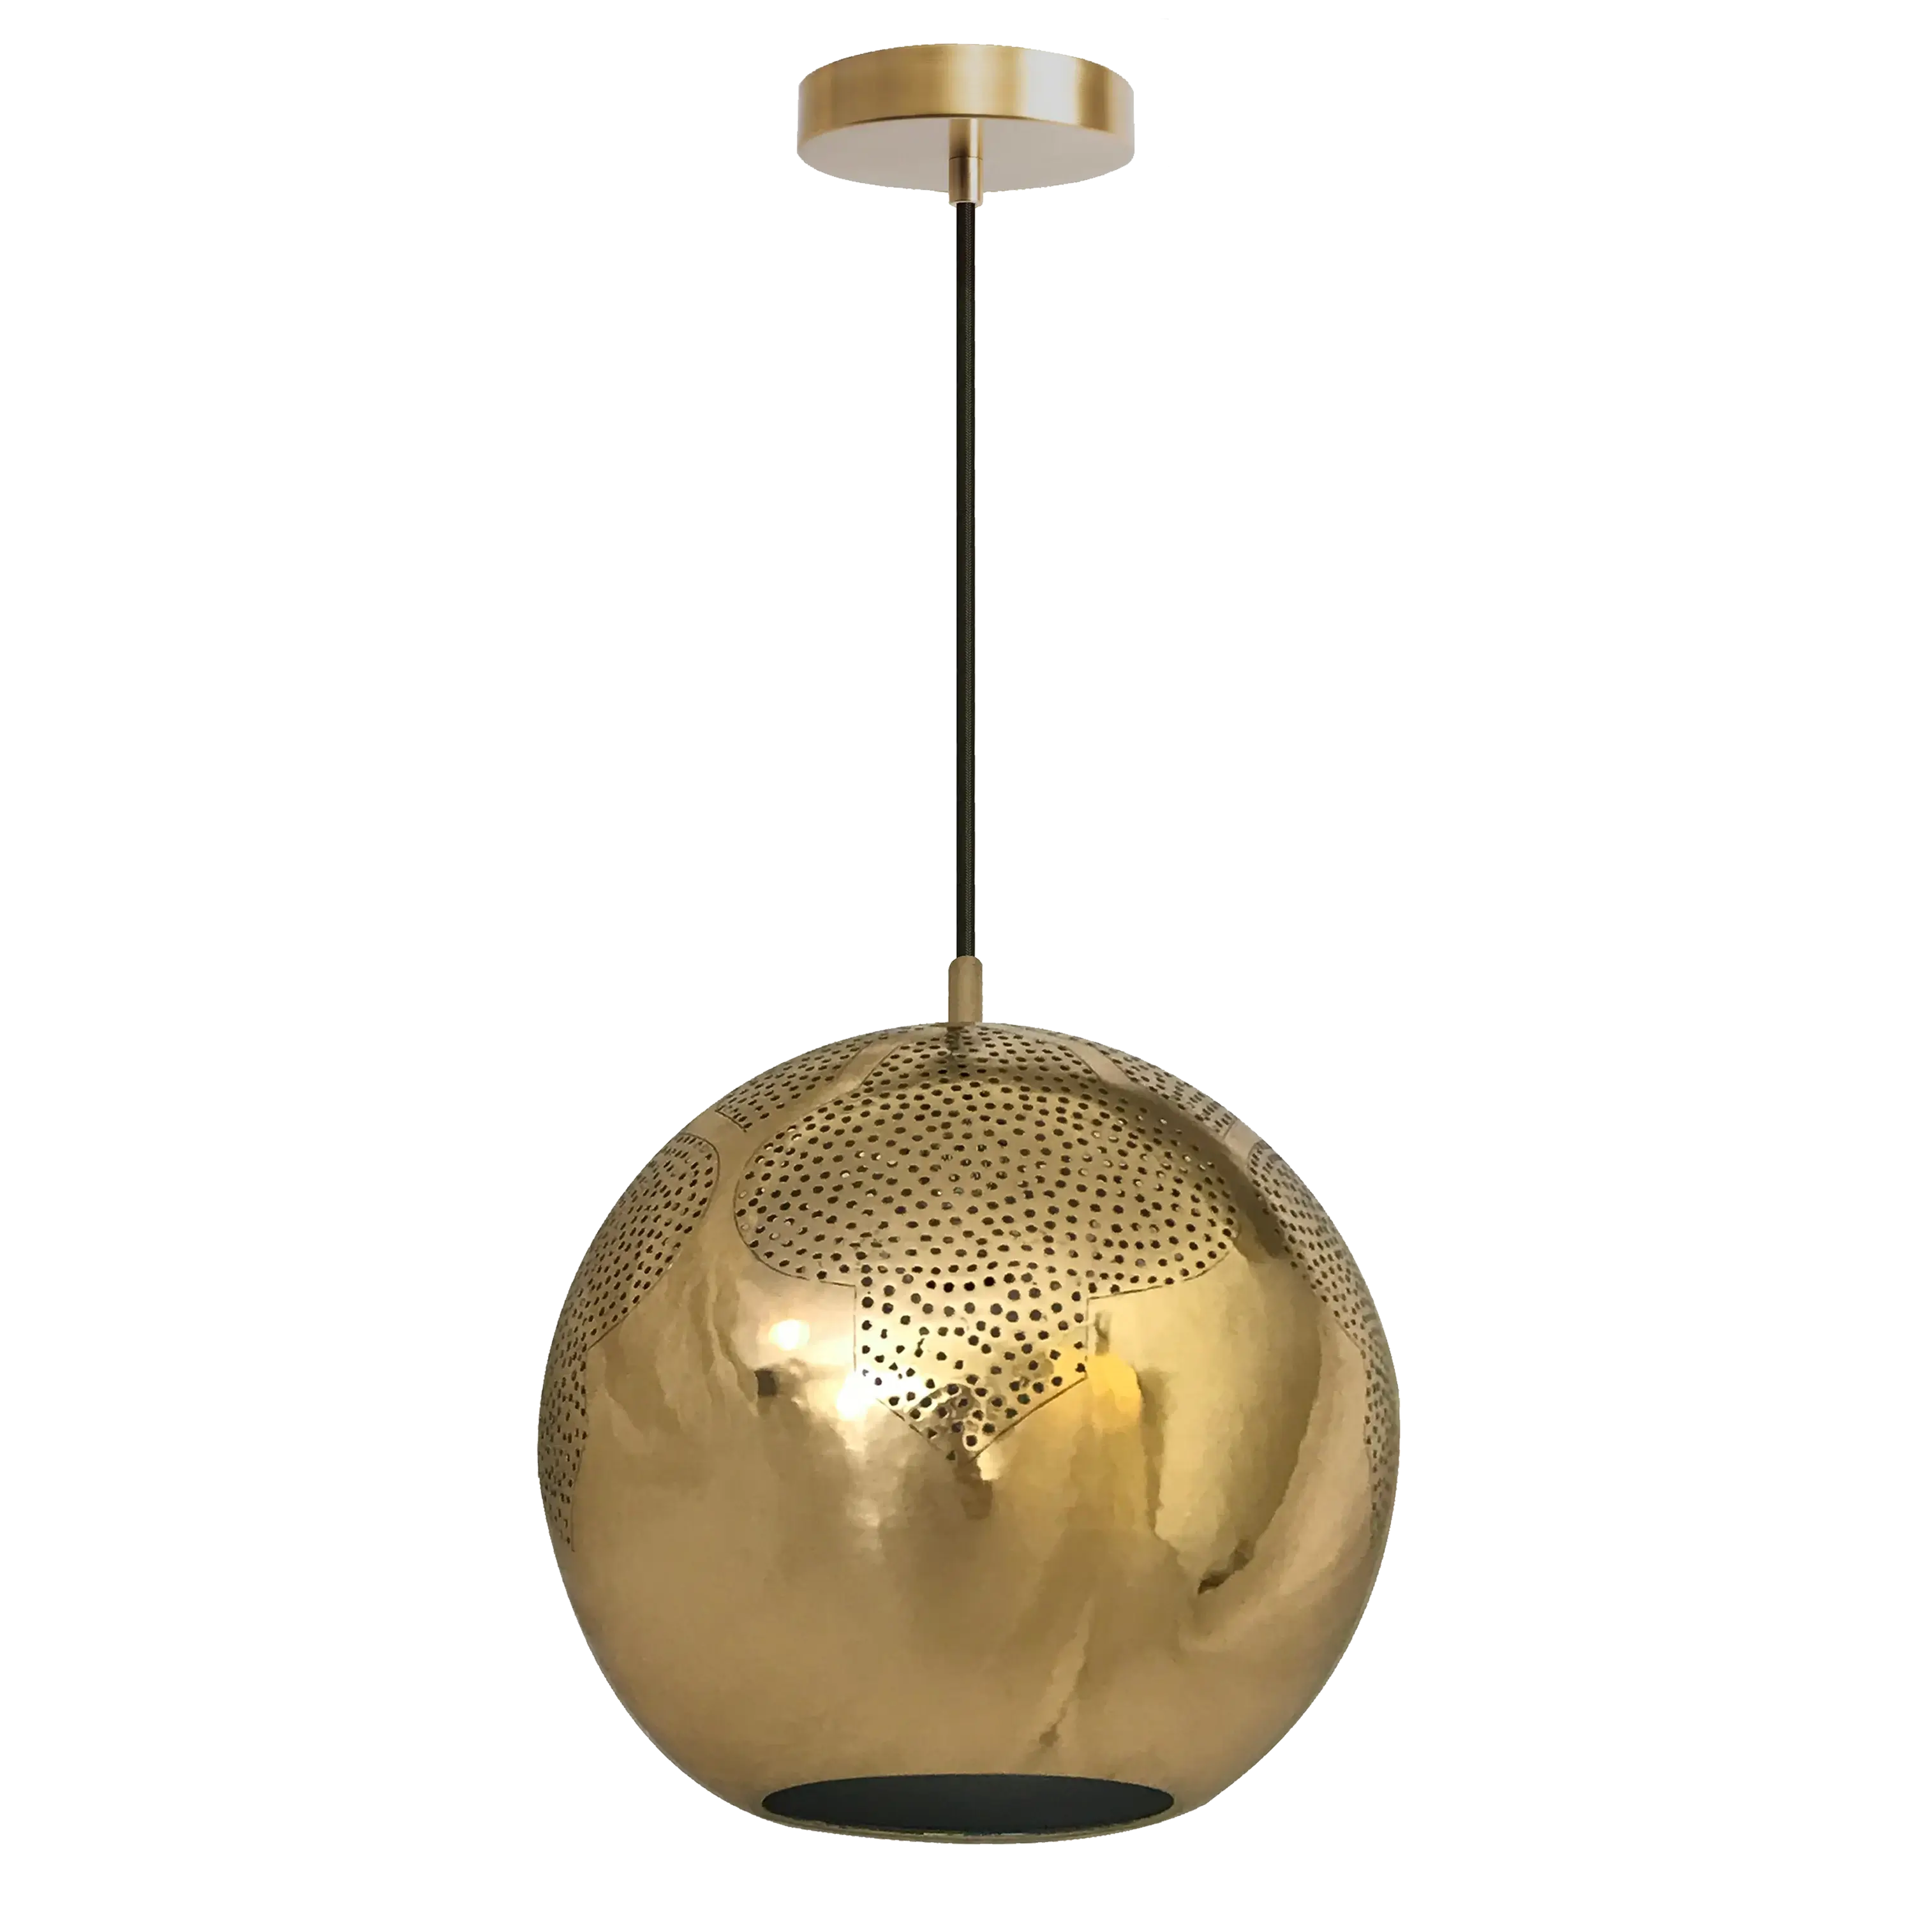 Dounia home Globe Pendant light in polished brass  made of Metal, Model: Najma trellis